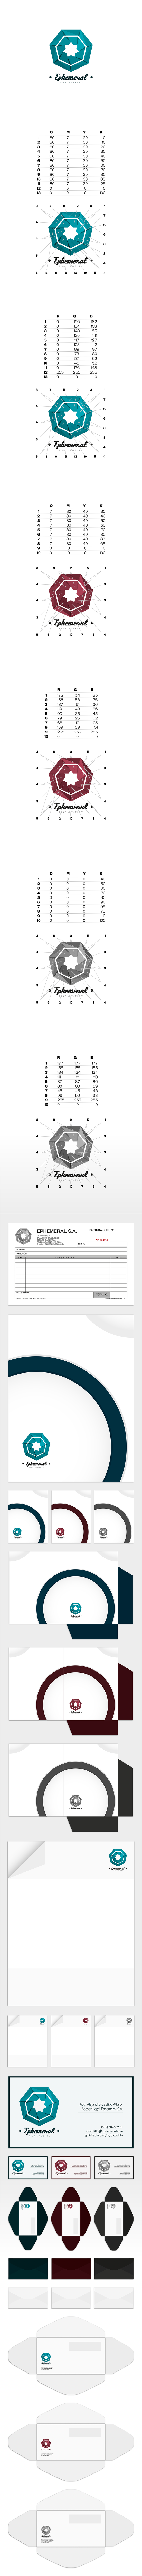 corporate identity Pack Logotype manual Folders paper envelopes